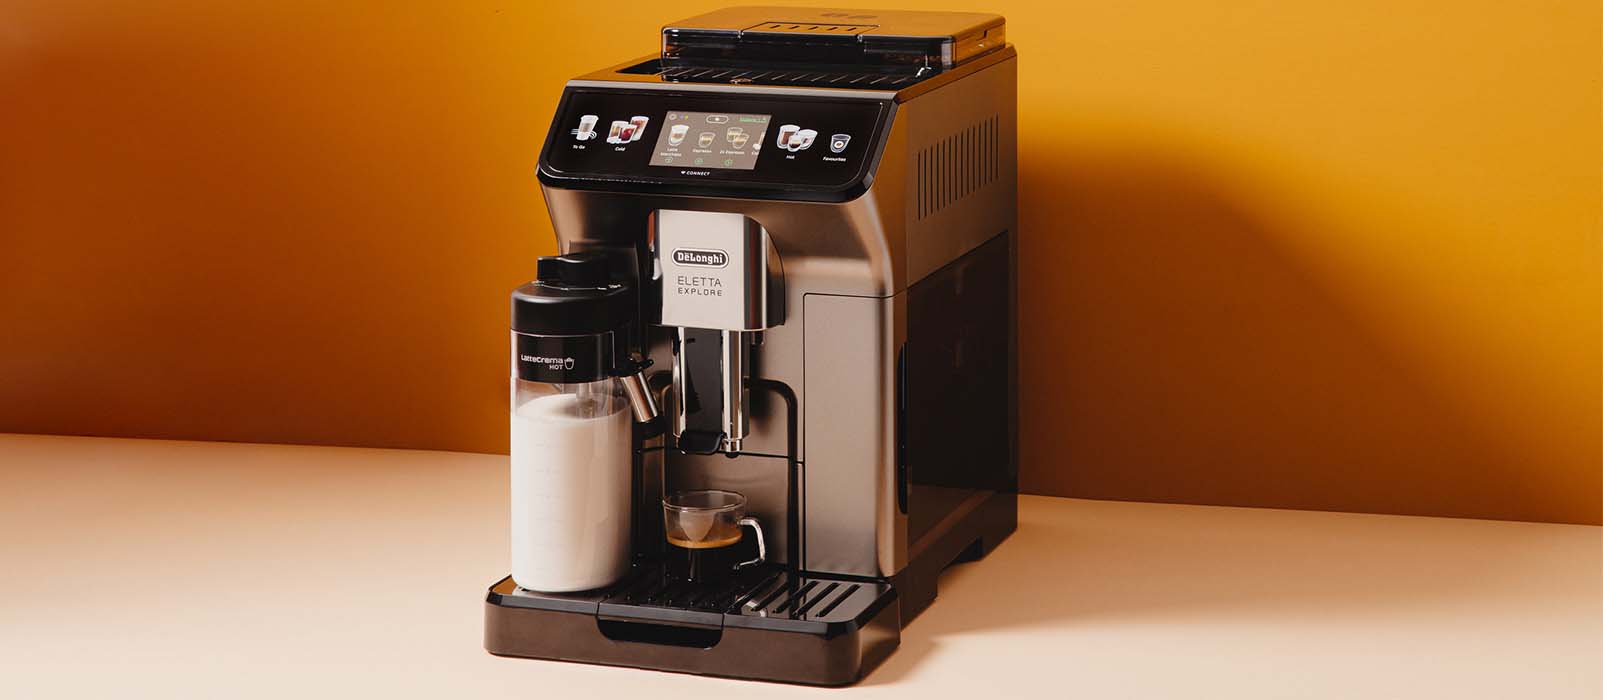 quelle machine à café choisir